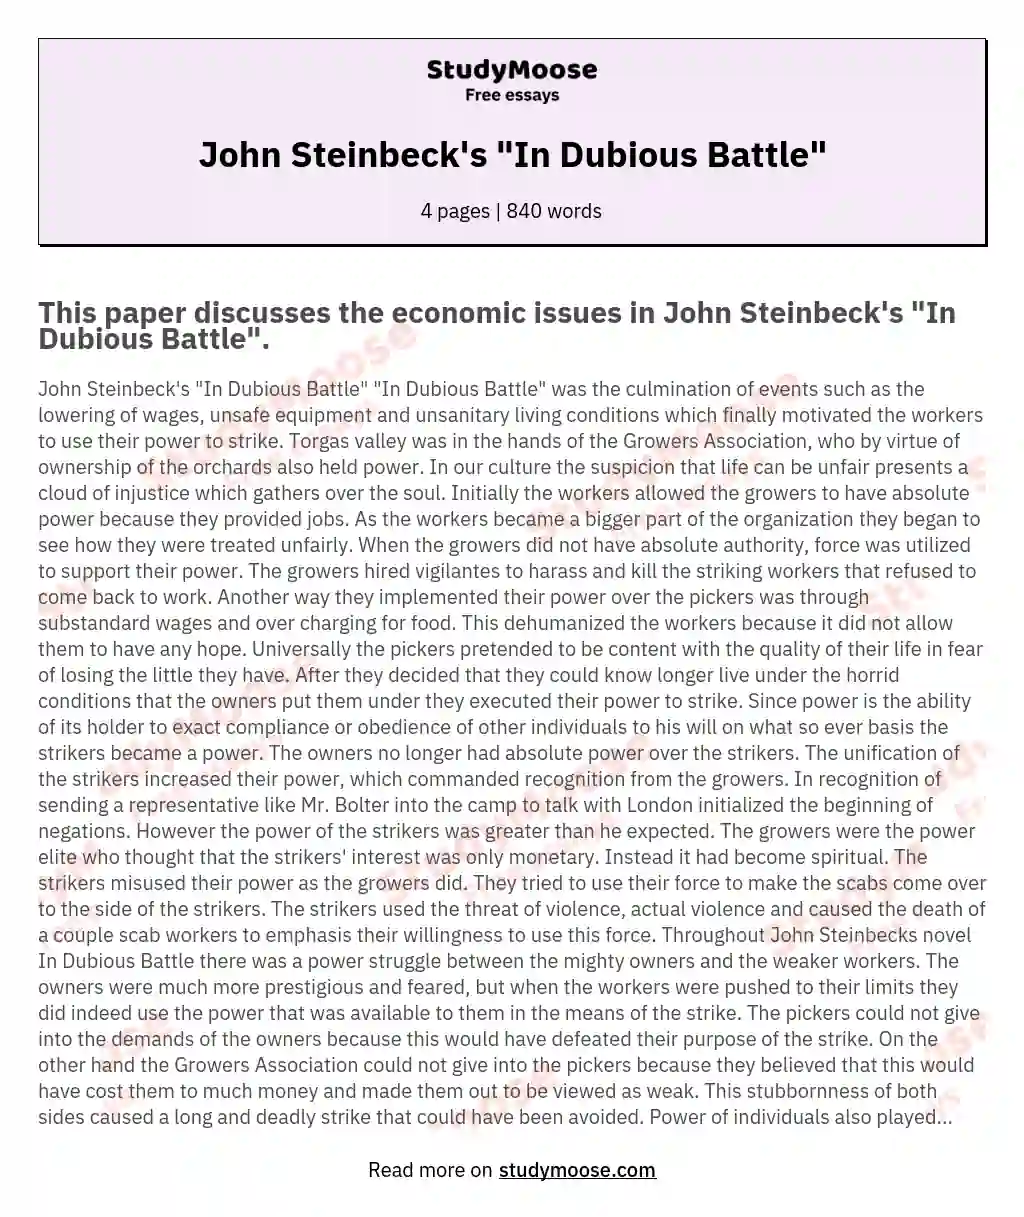 John Steinbeck's "In Dubious Battle" essay